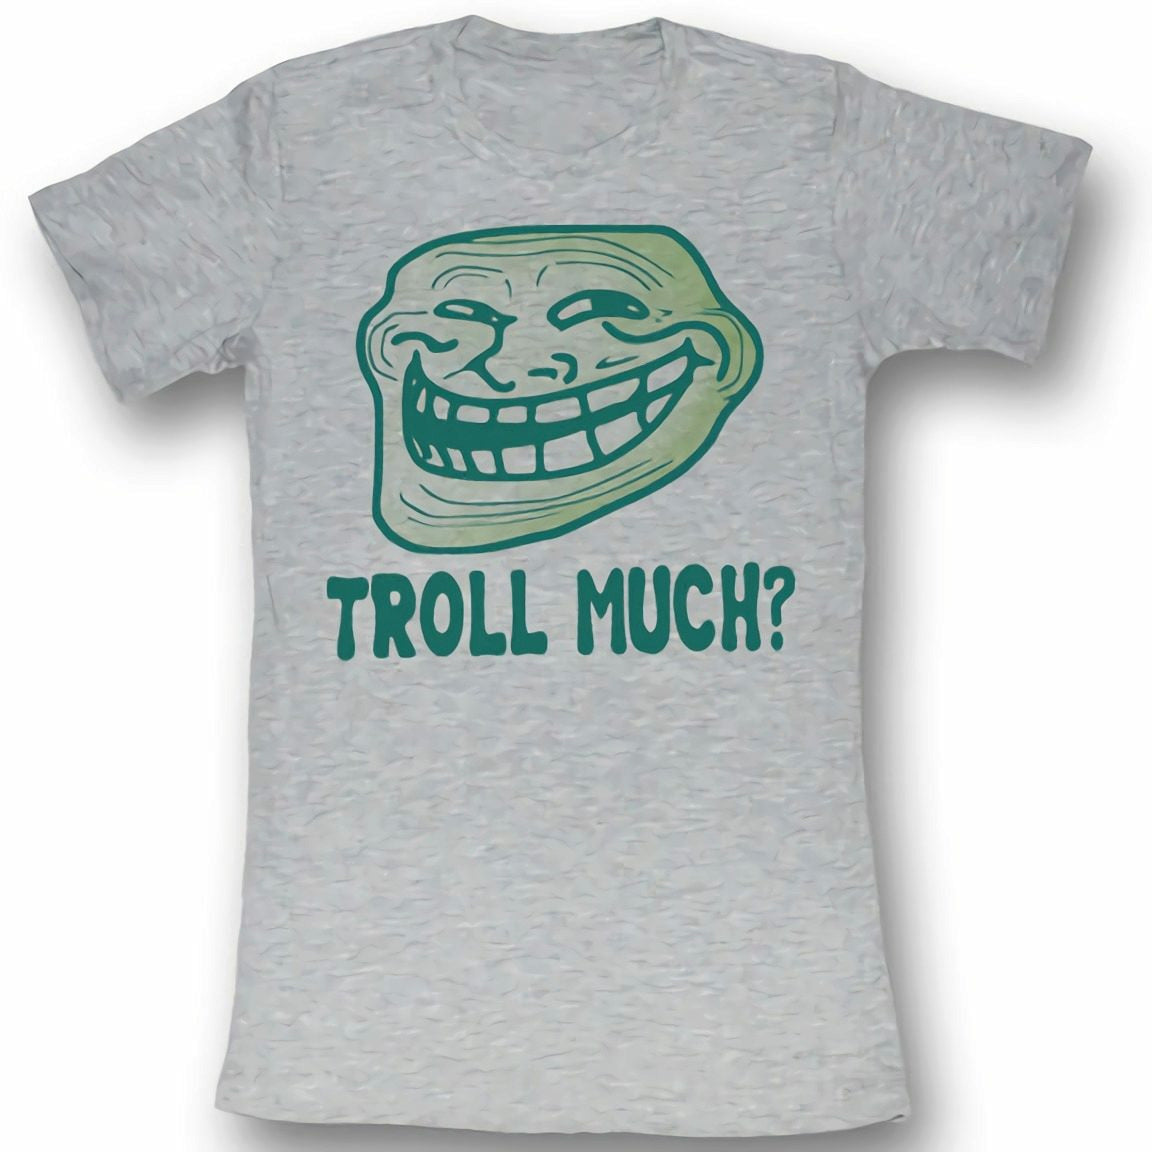 Troll Face You Mad Troll Much? Juniors Heather Grey T-Shirt